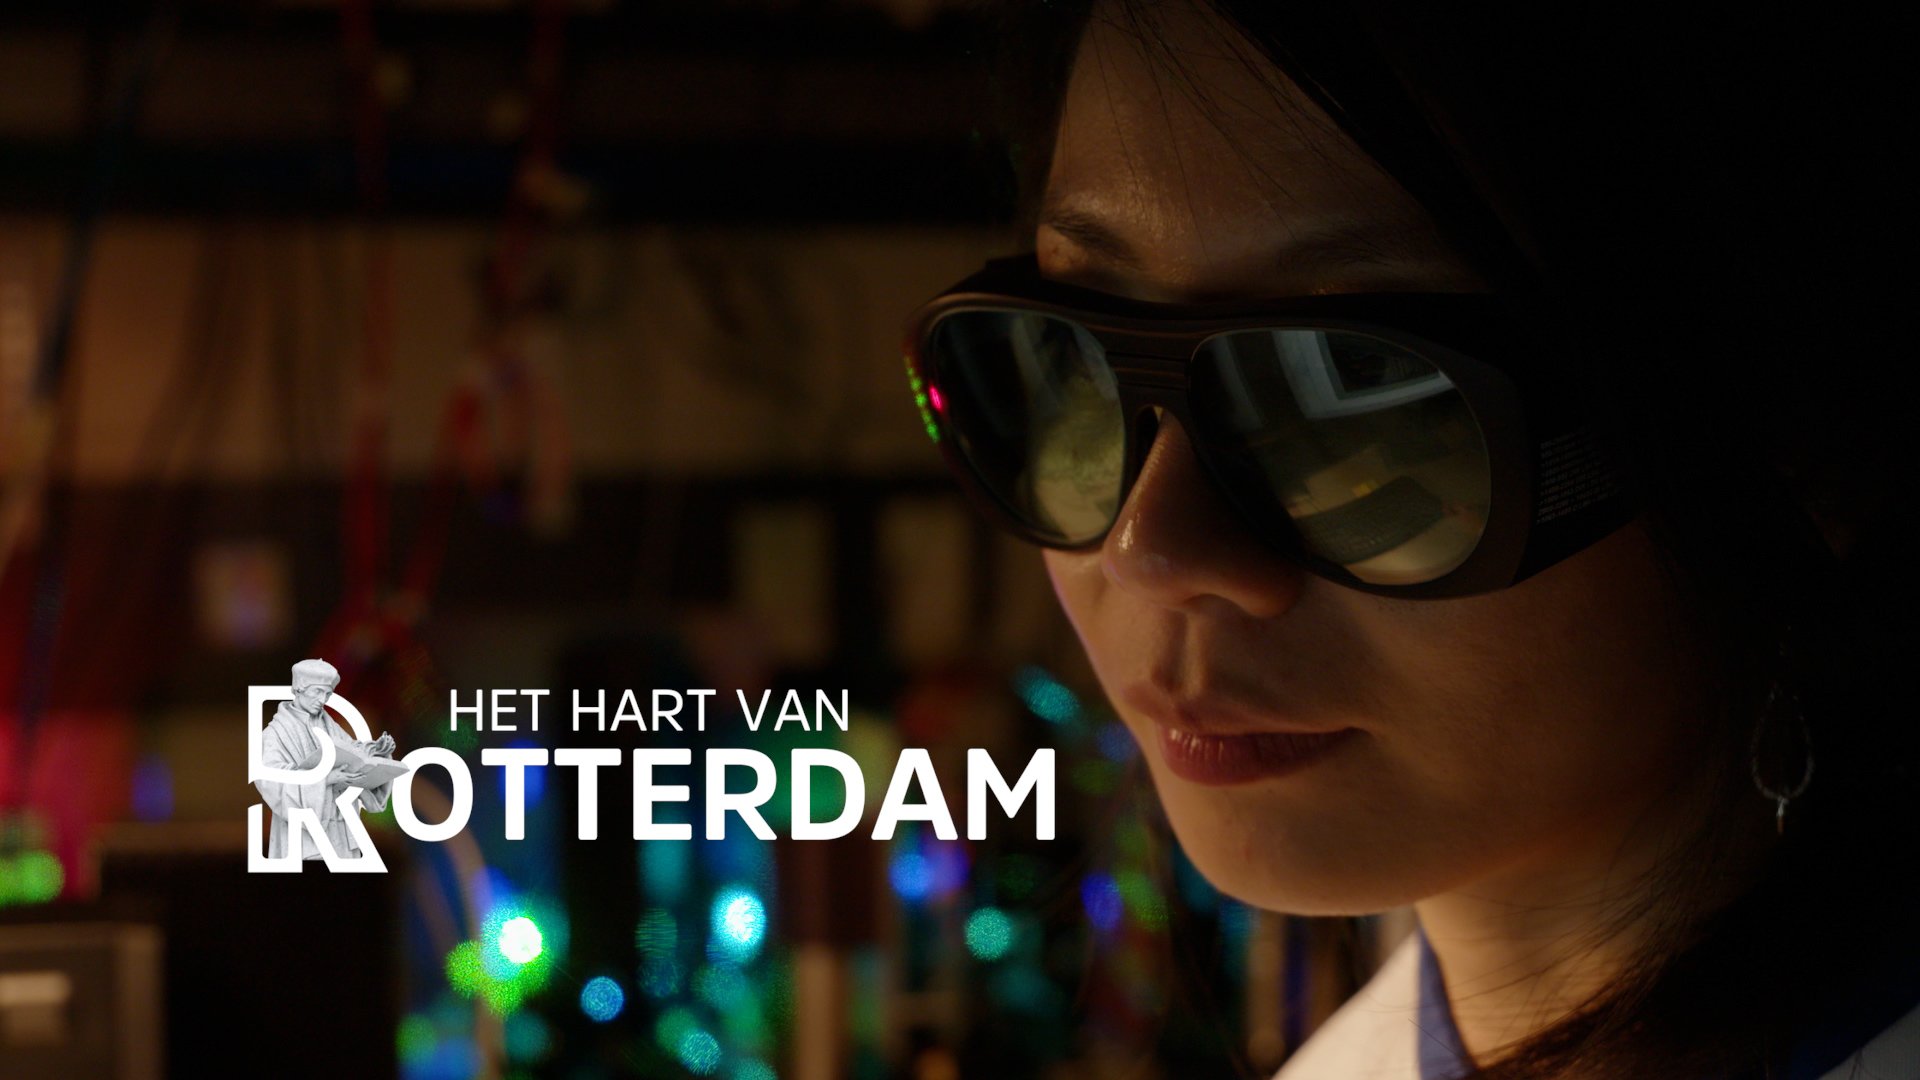 New on TV Rijnmond: The heart of Rotterdam